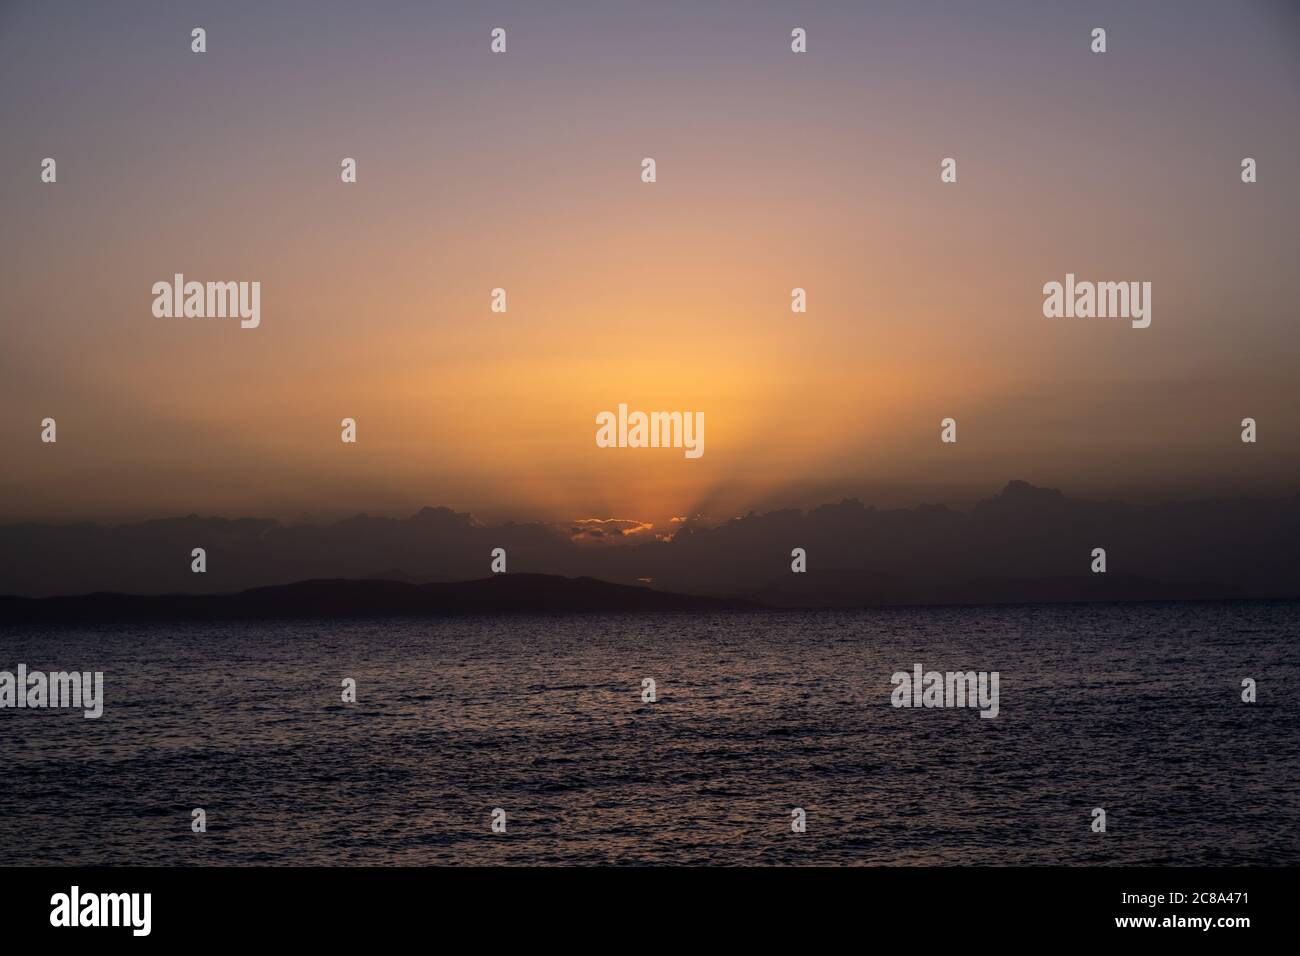 Seascape in Aegean sea, Greece after sunset. Dark island land and orange sky cloudscape over sea water. Stock Photo